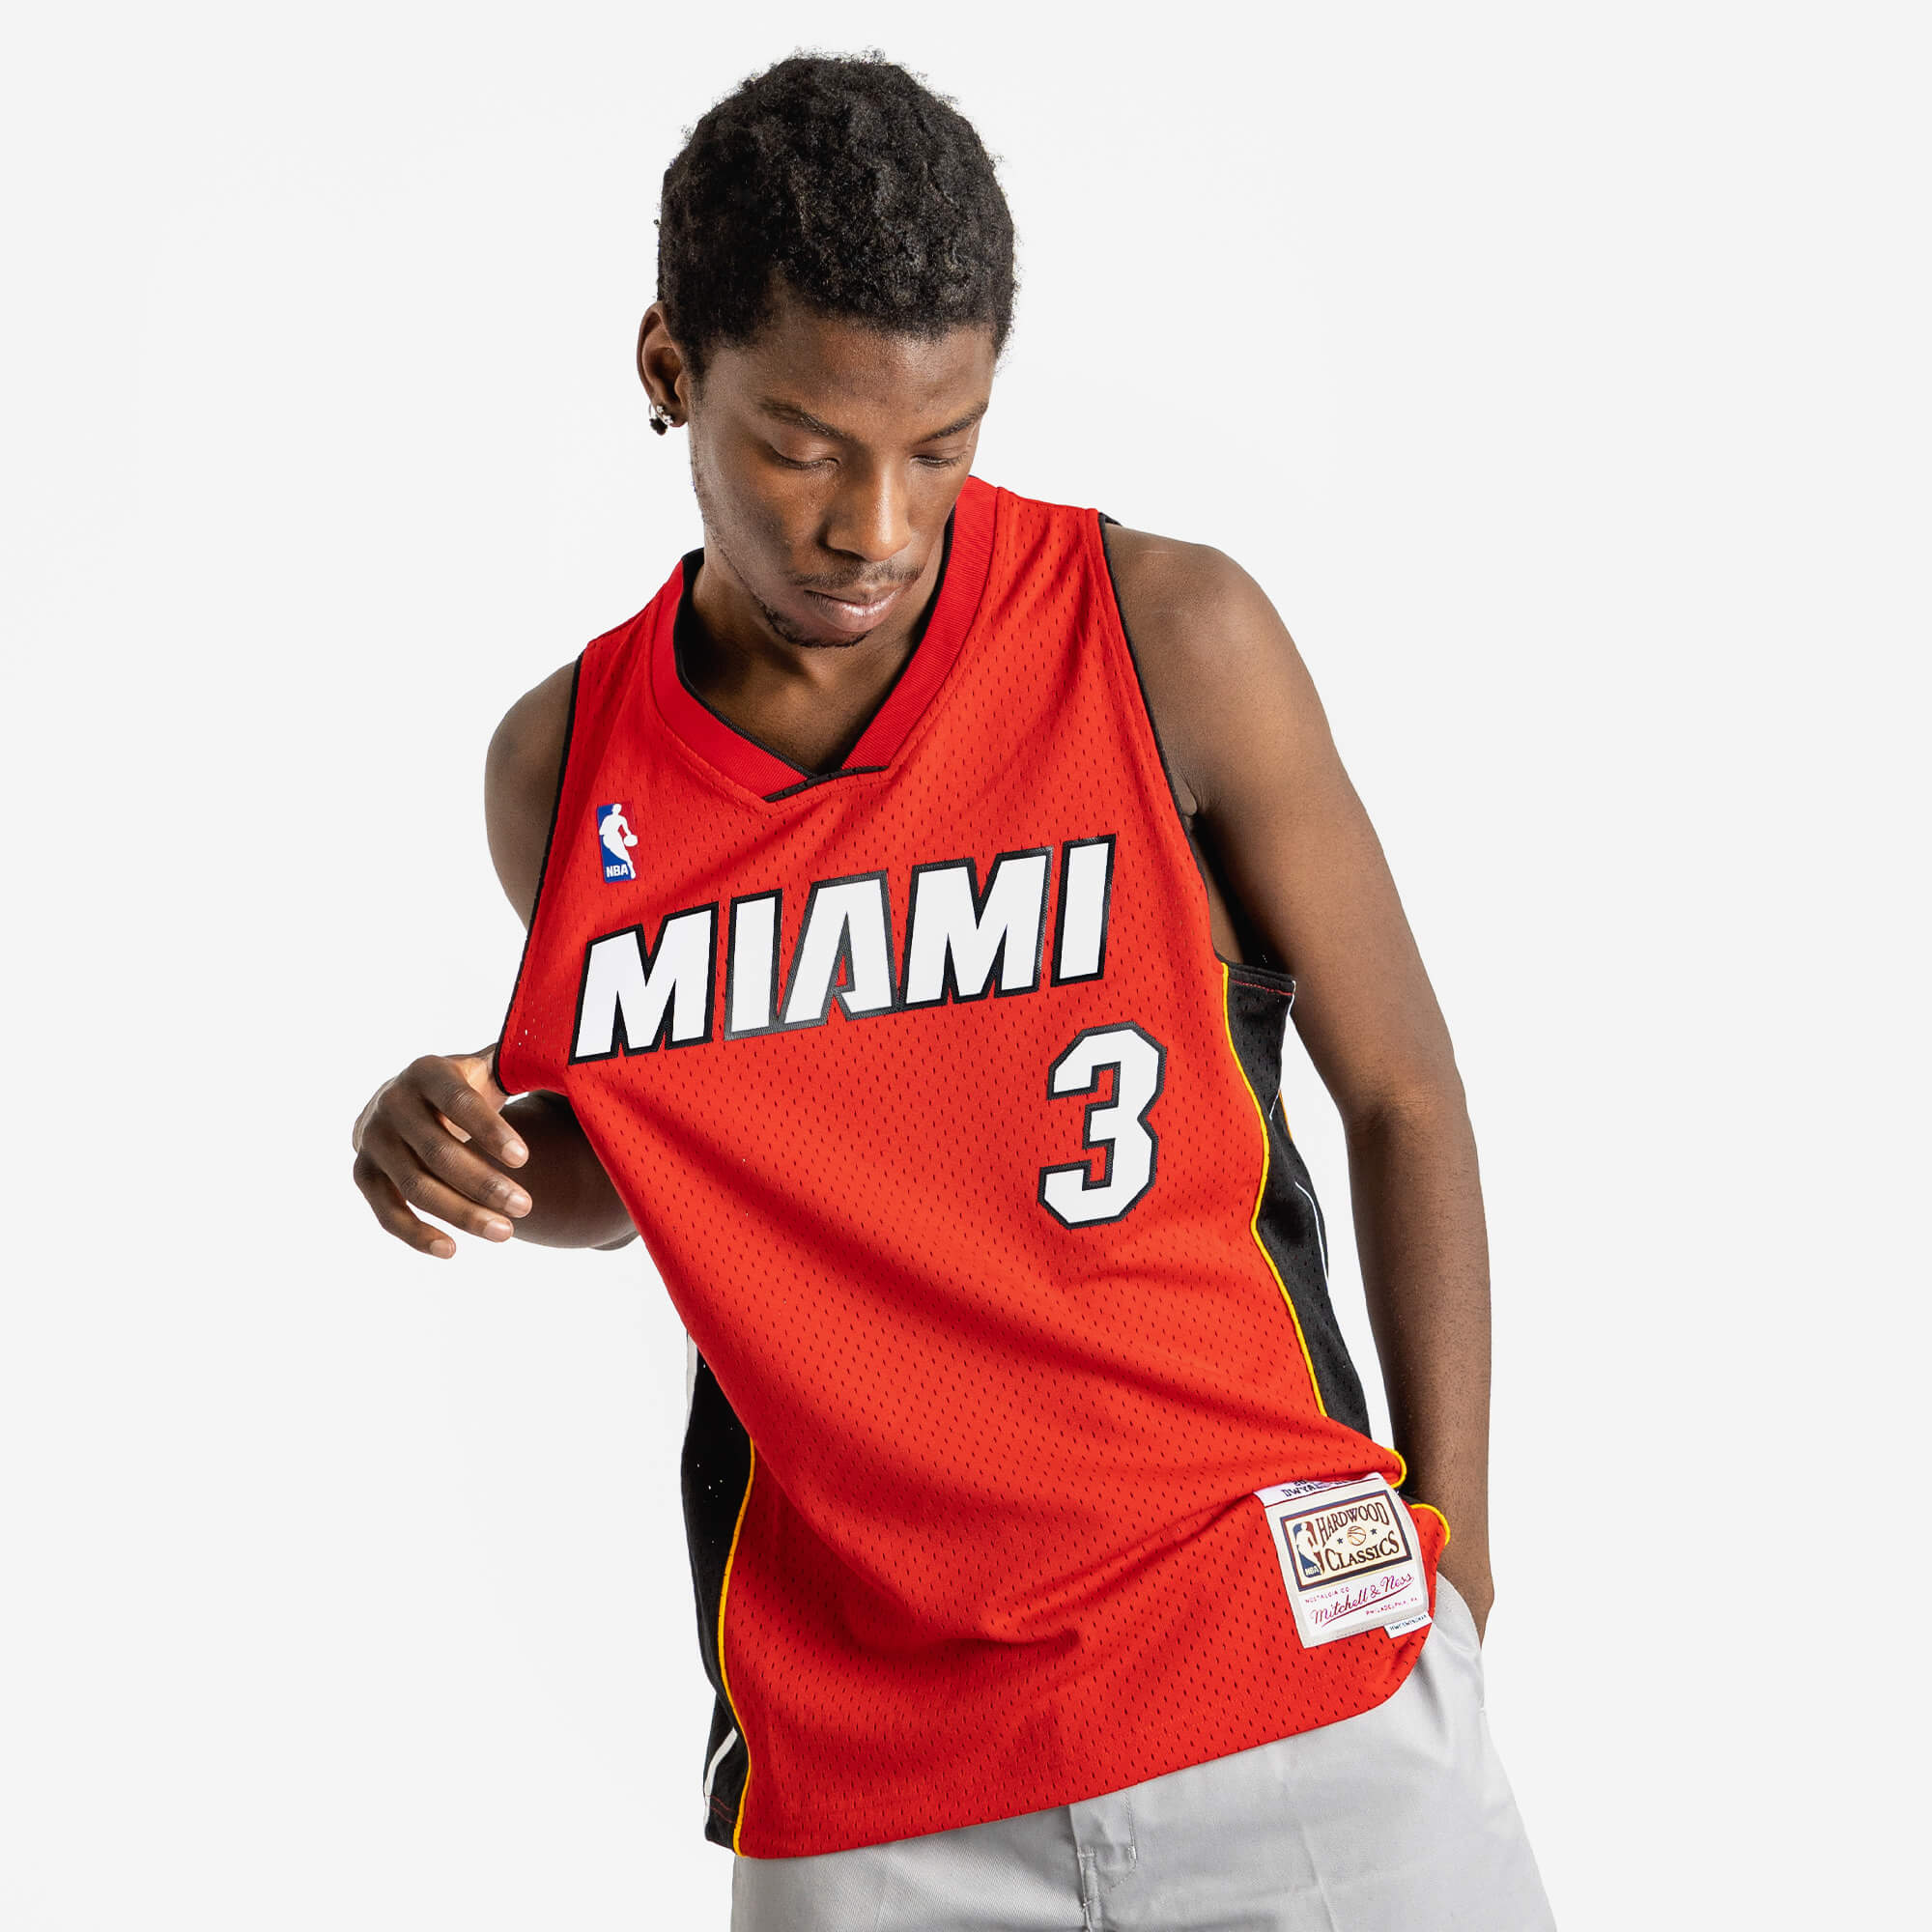 HolySport Miami Heat Vintage 90s Champion Basketball Shorts - Red NBA Jersey Uniform Bottoms - Dwayne Wade - Size Men's XL 